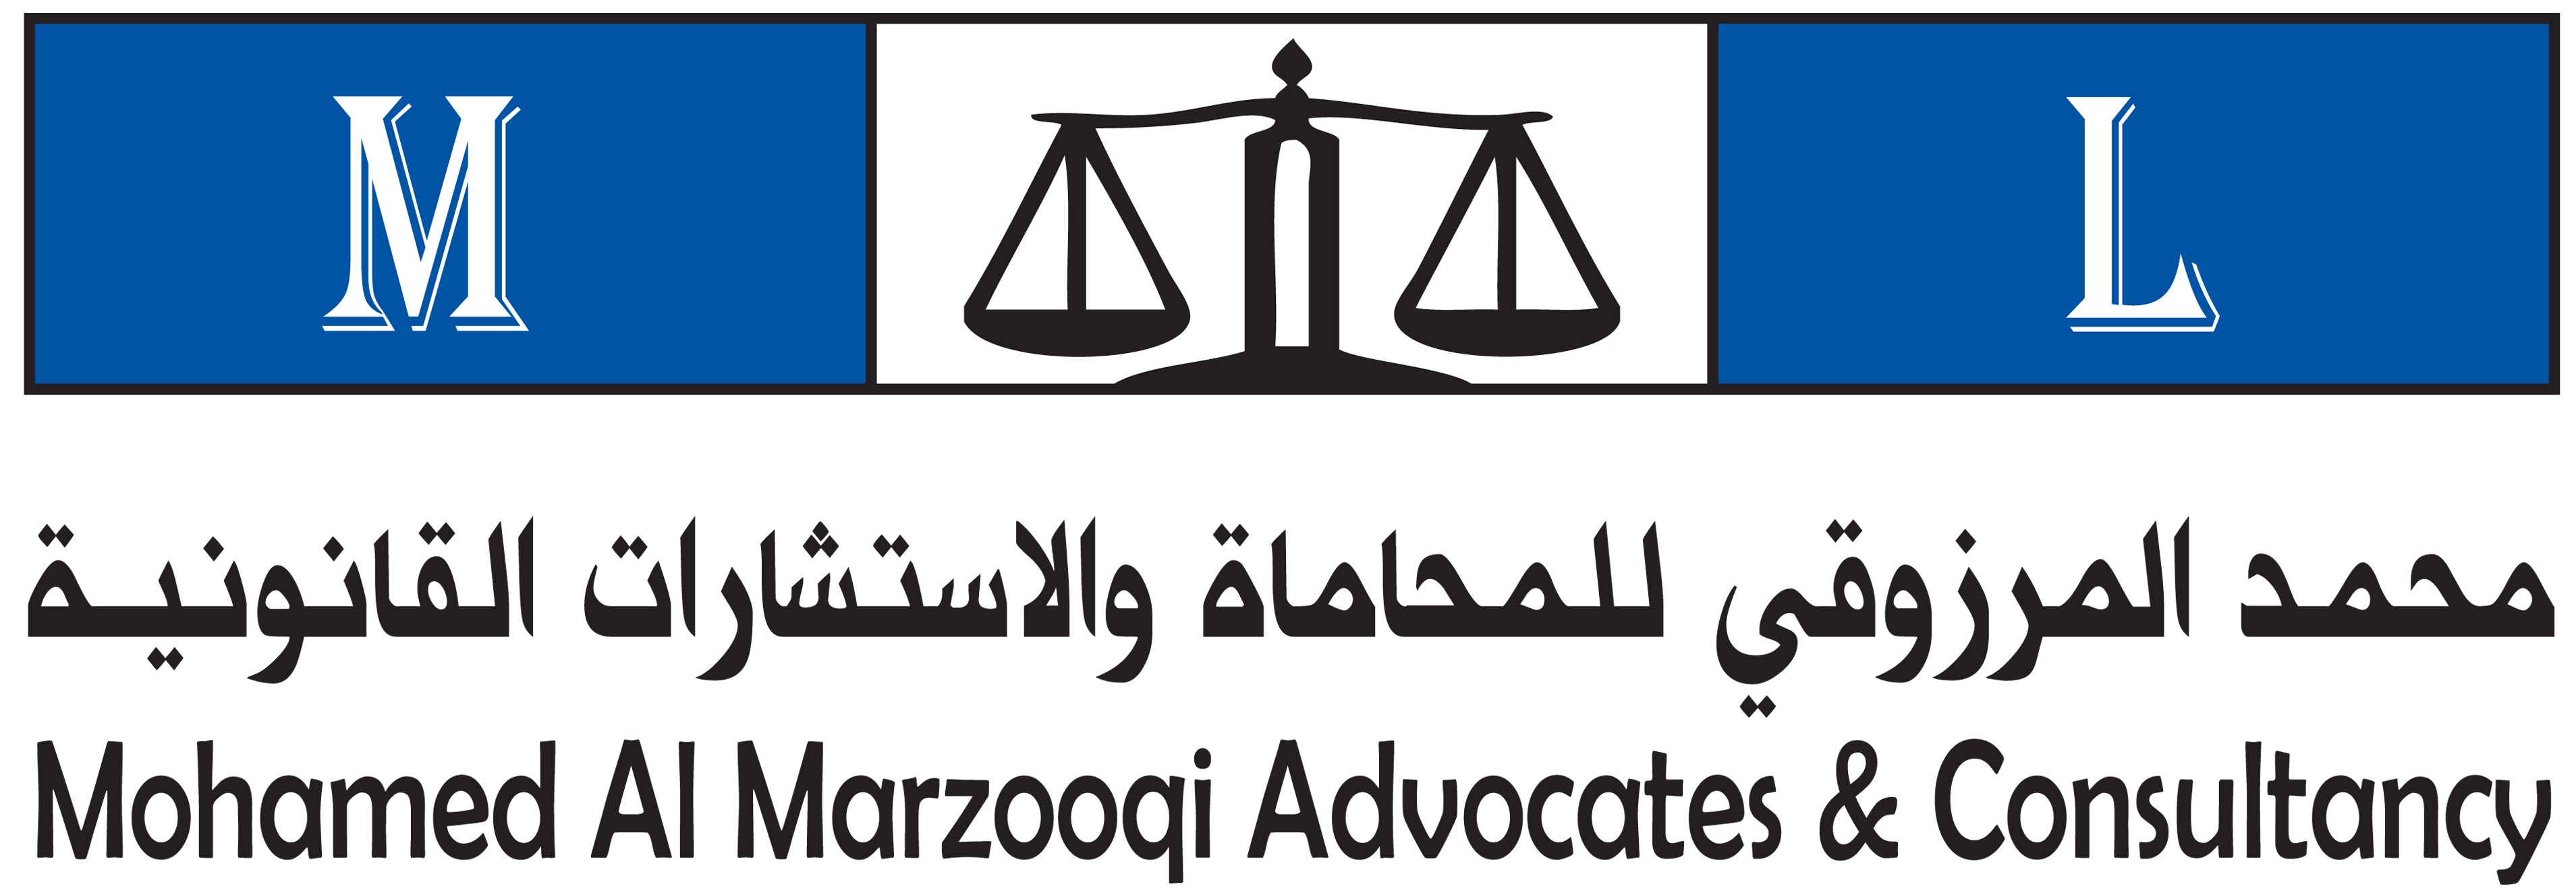 Mohamed Al Marzooqi Advocates & Consultancy Logo